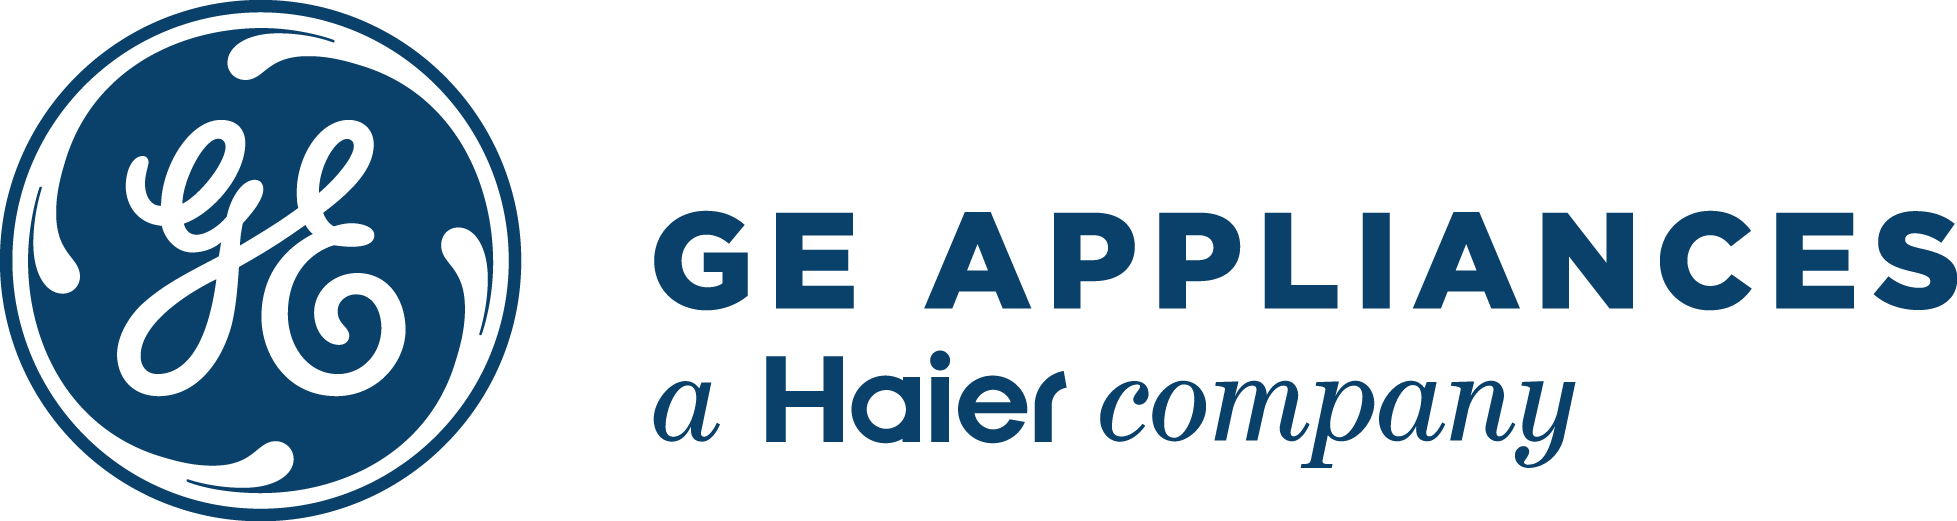 GE Appliance - Haier Company Logo.png